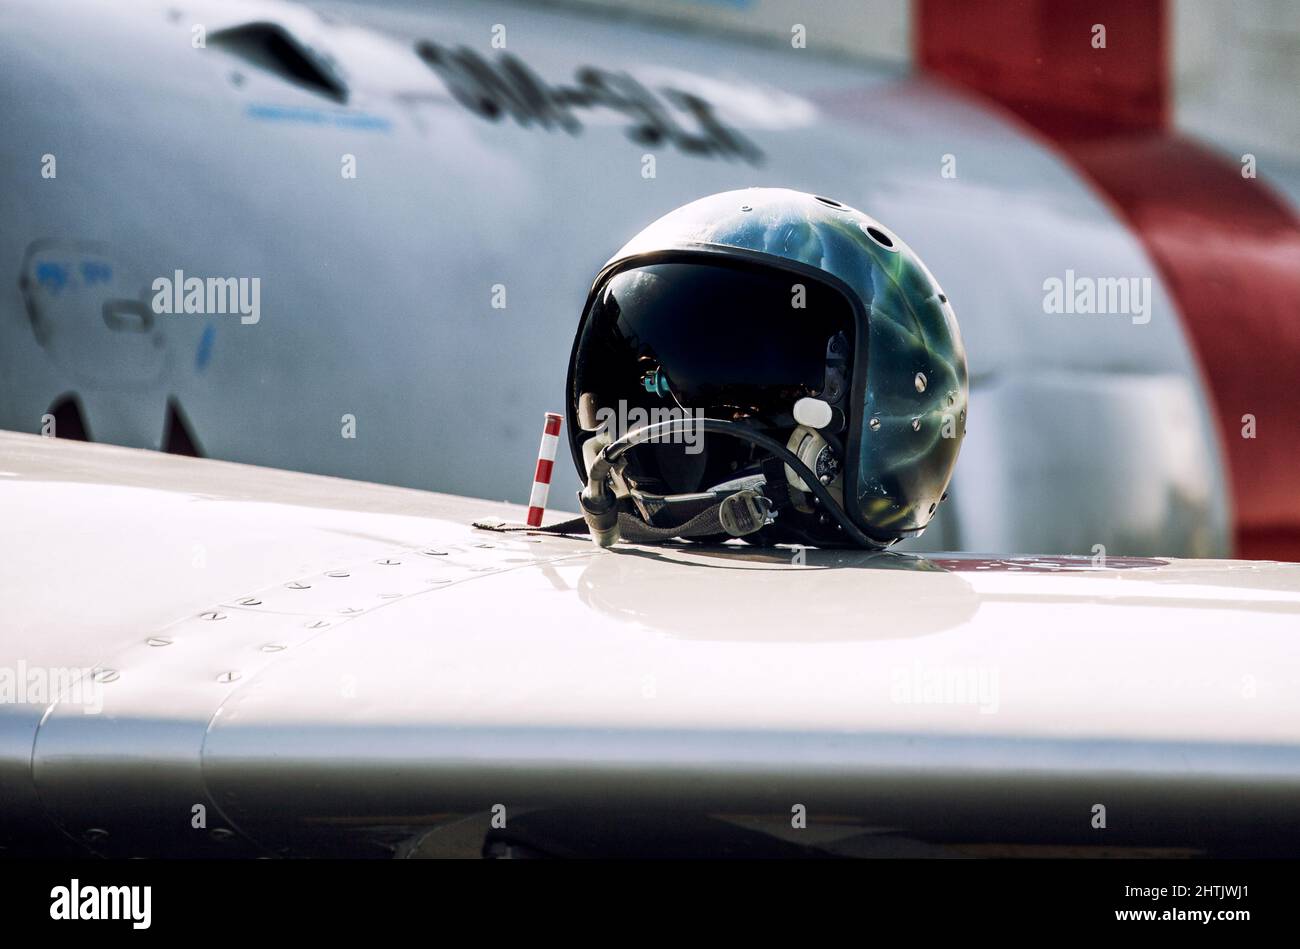 FIghter pilot helmet on wing of fighter jet. Stock Photo